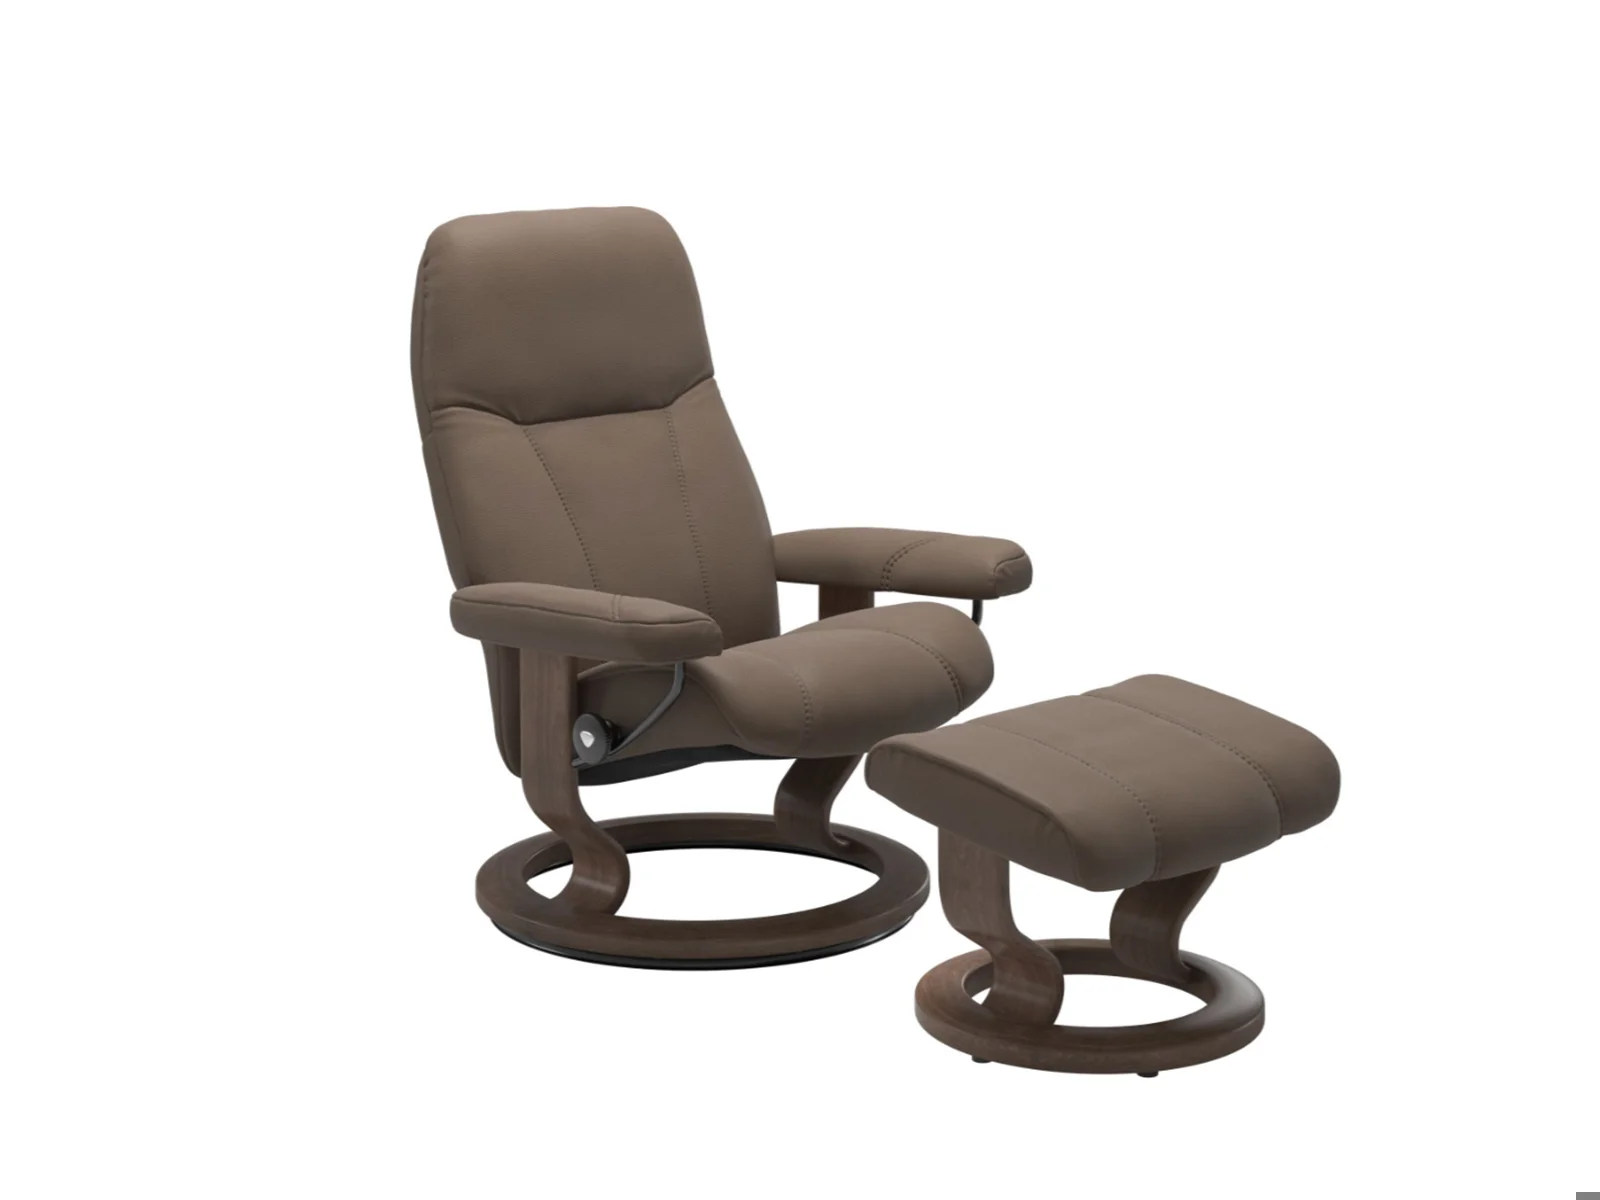 Medium Chair And Footstool